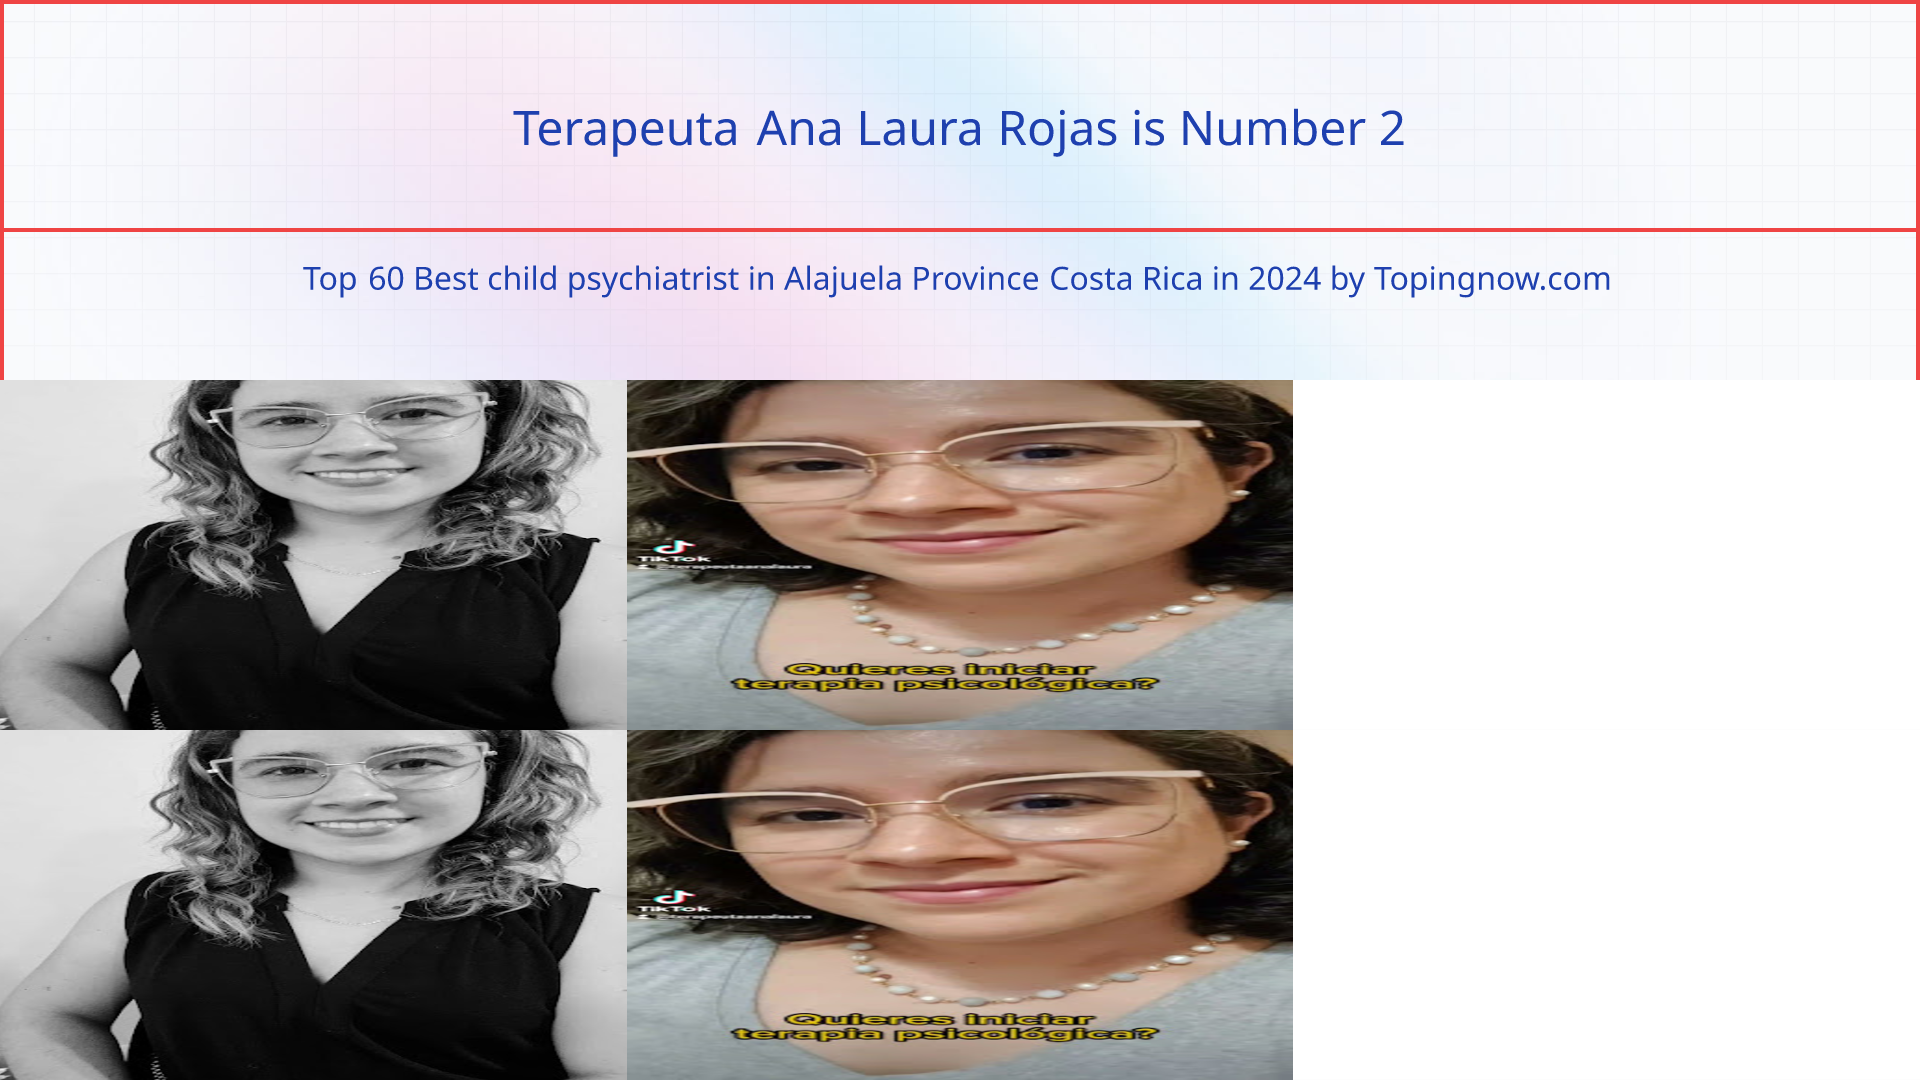 Terapeuta Ana Laura Rojas: Top 60 Best child psychiatrist in Alajuela Province Costa Rica in 2024